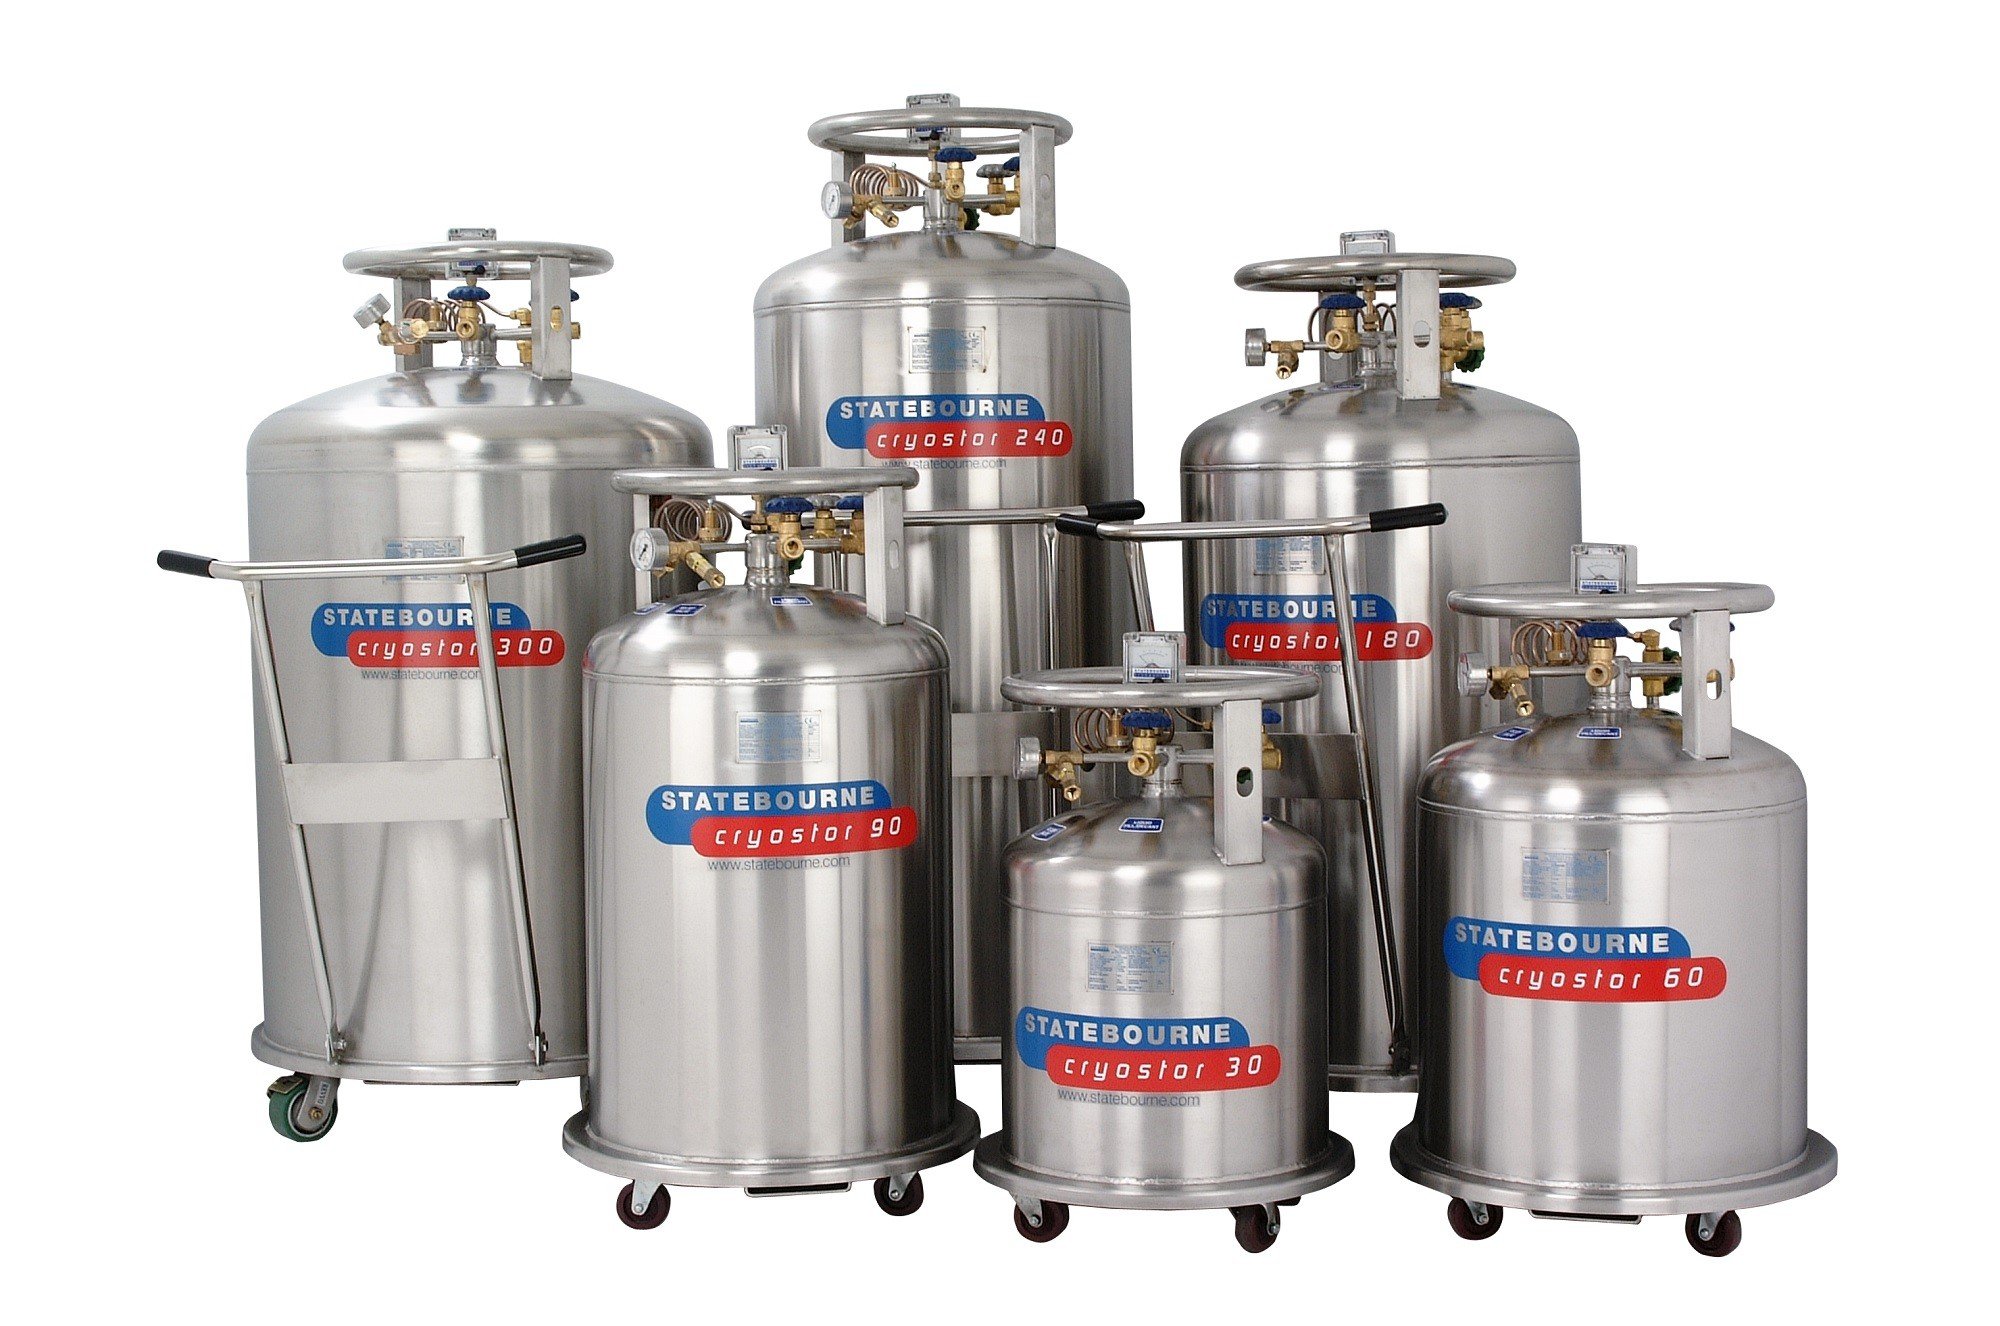 Statebourne Cryogenics 9911087 Cryostor 240 Stainless Steel Low Pressure LN2 Dewars 240 Litres for storage and dispensing liquid nitrogen